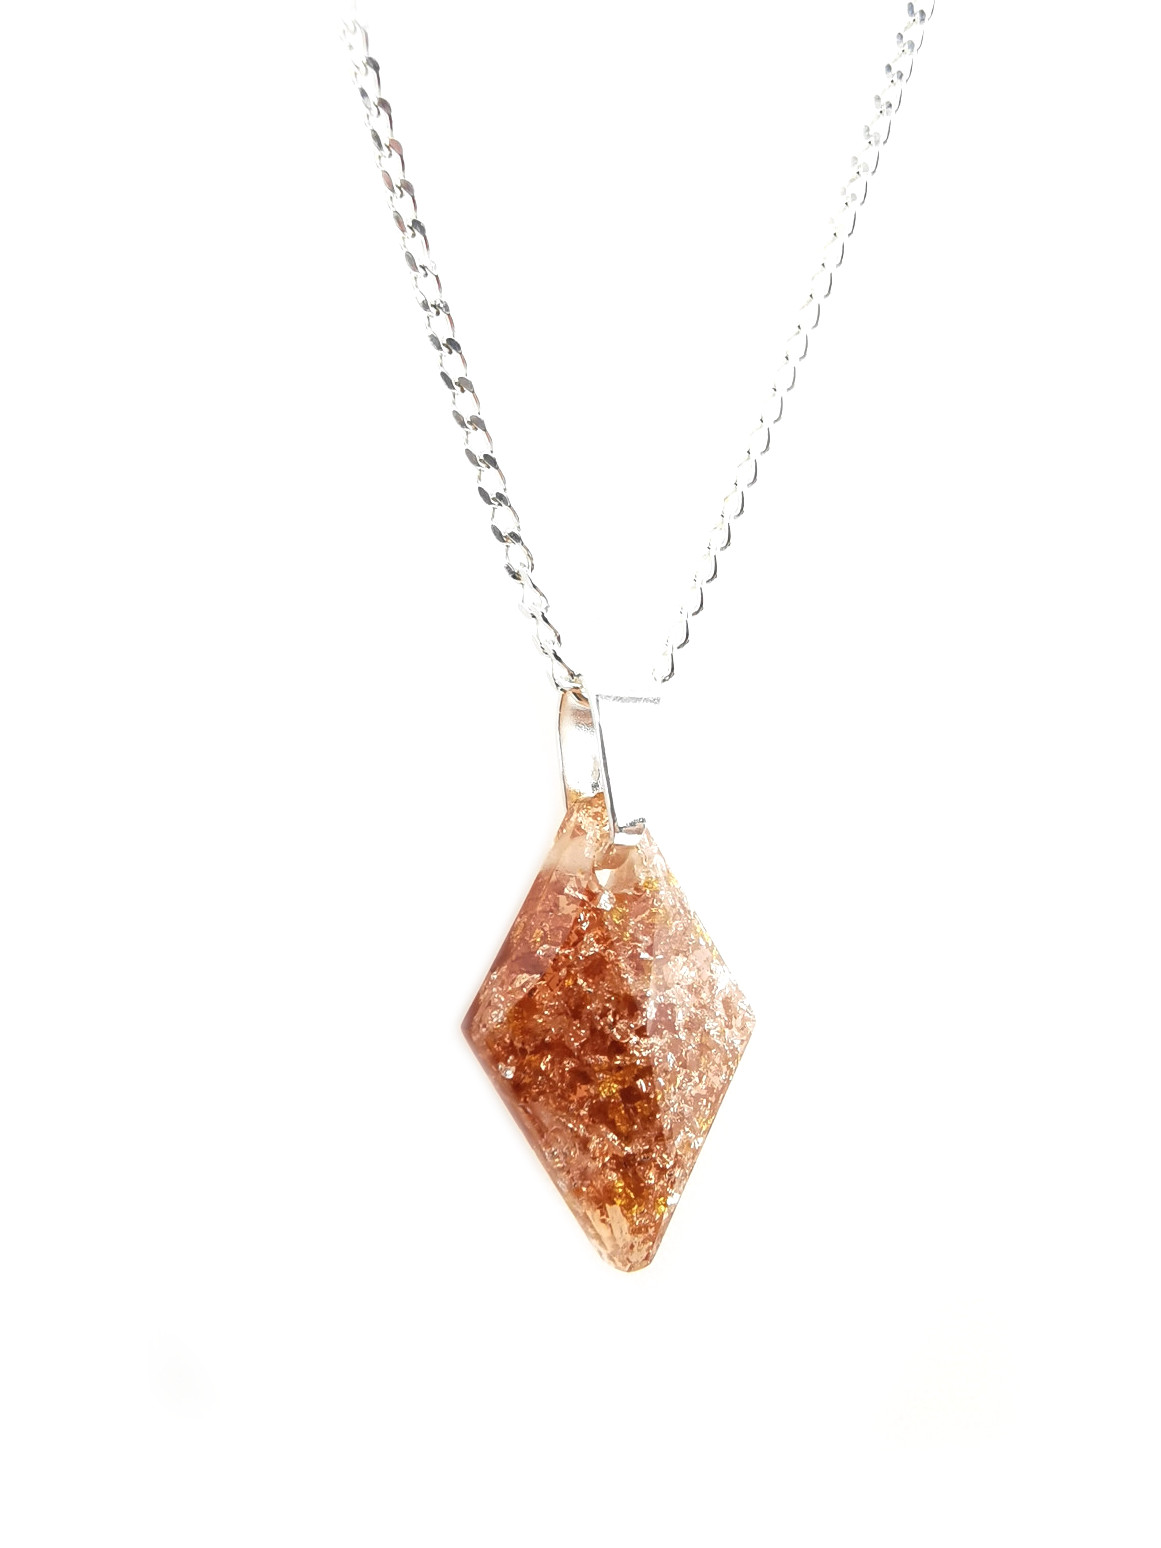 Amber Rhombus Orgone Jewelry Pendant by OrgoneVibes